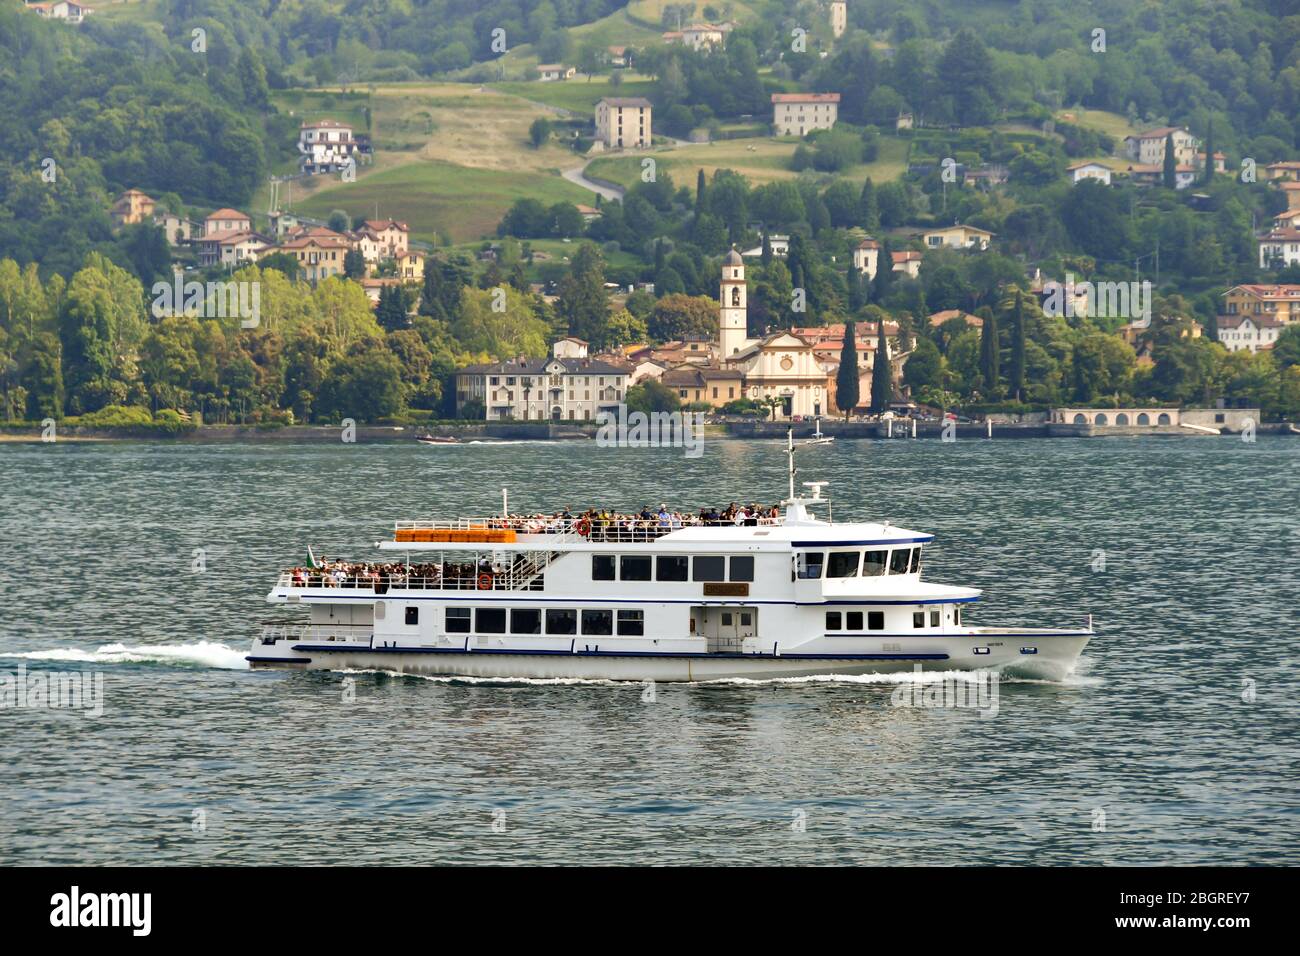 CADENABBIA, LAKE COMO - JUNE 2019: Small passenger ferry with people on board crossing Lake Como near Cadenabbia Stock Photo